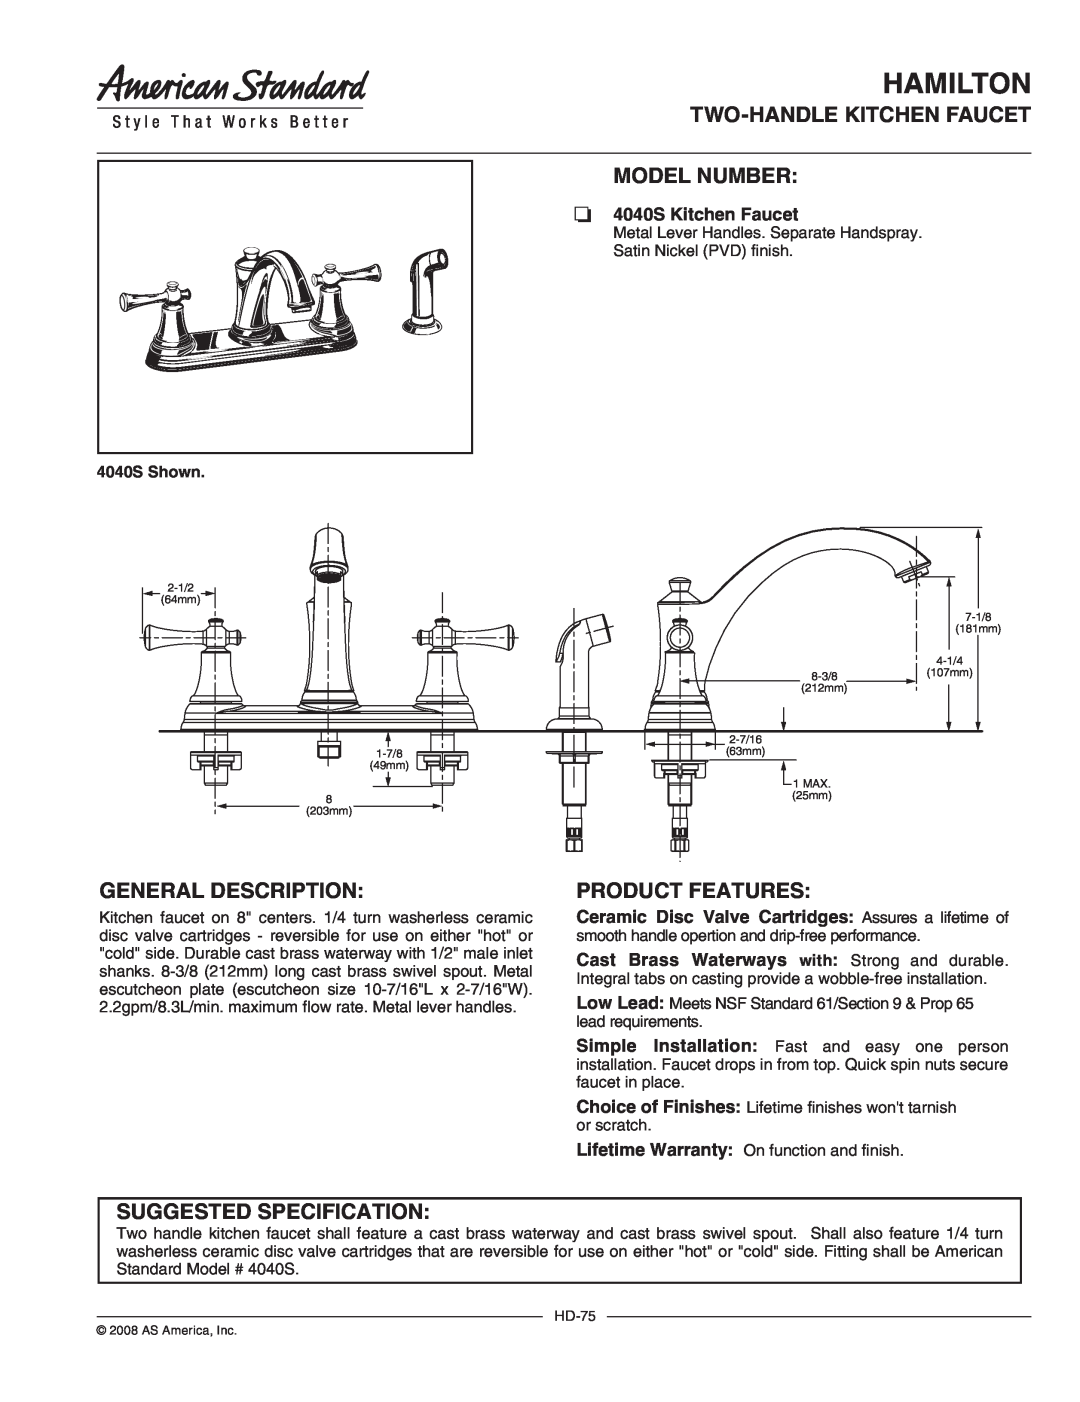 American Standard 4040S warranty Hamilton, Two-Handlekitchen Faucet Model Number, General Description, Product Features 